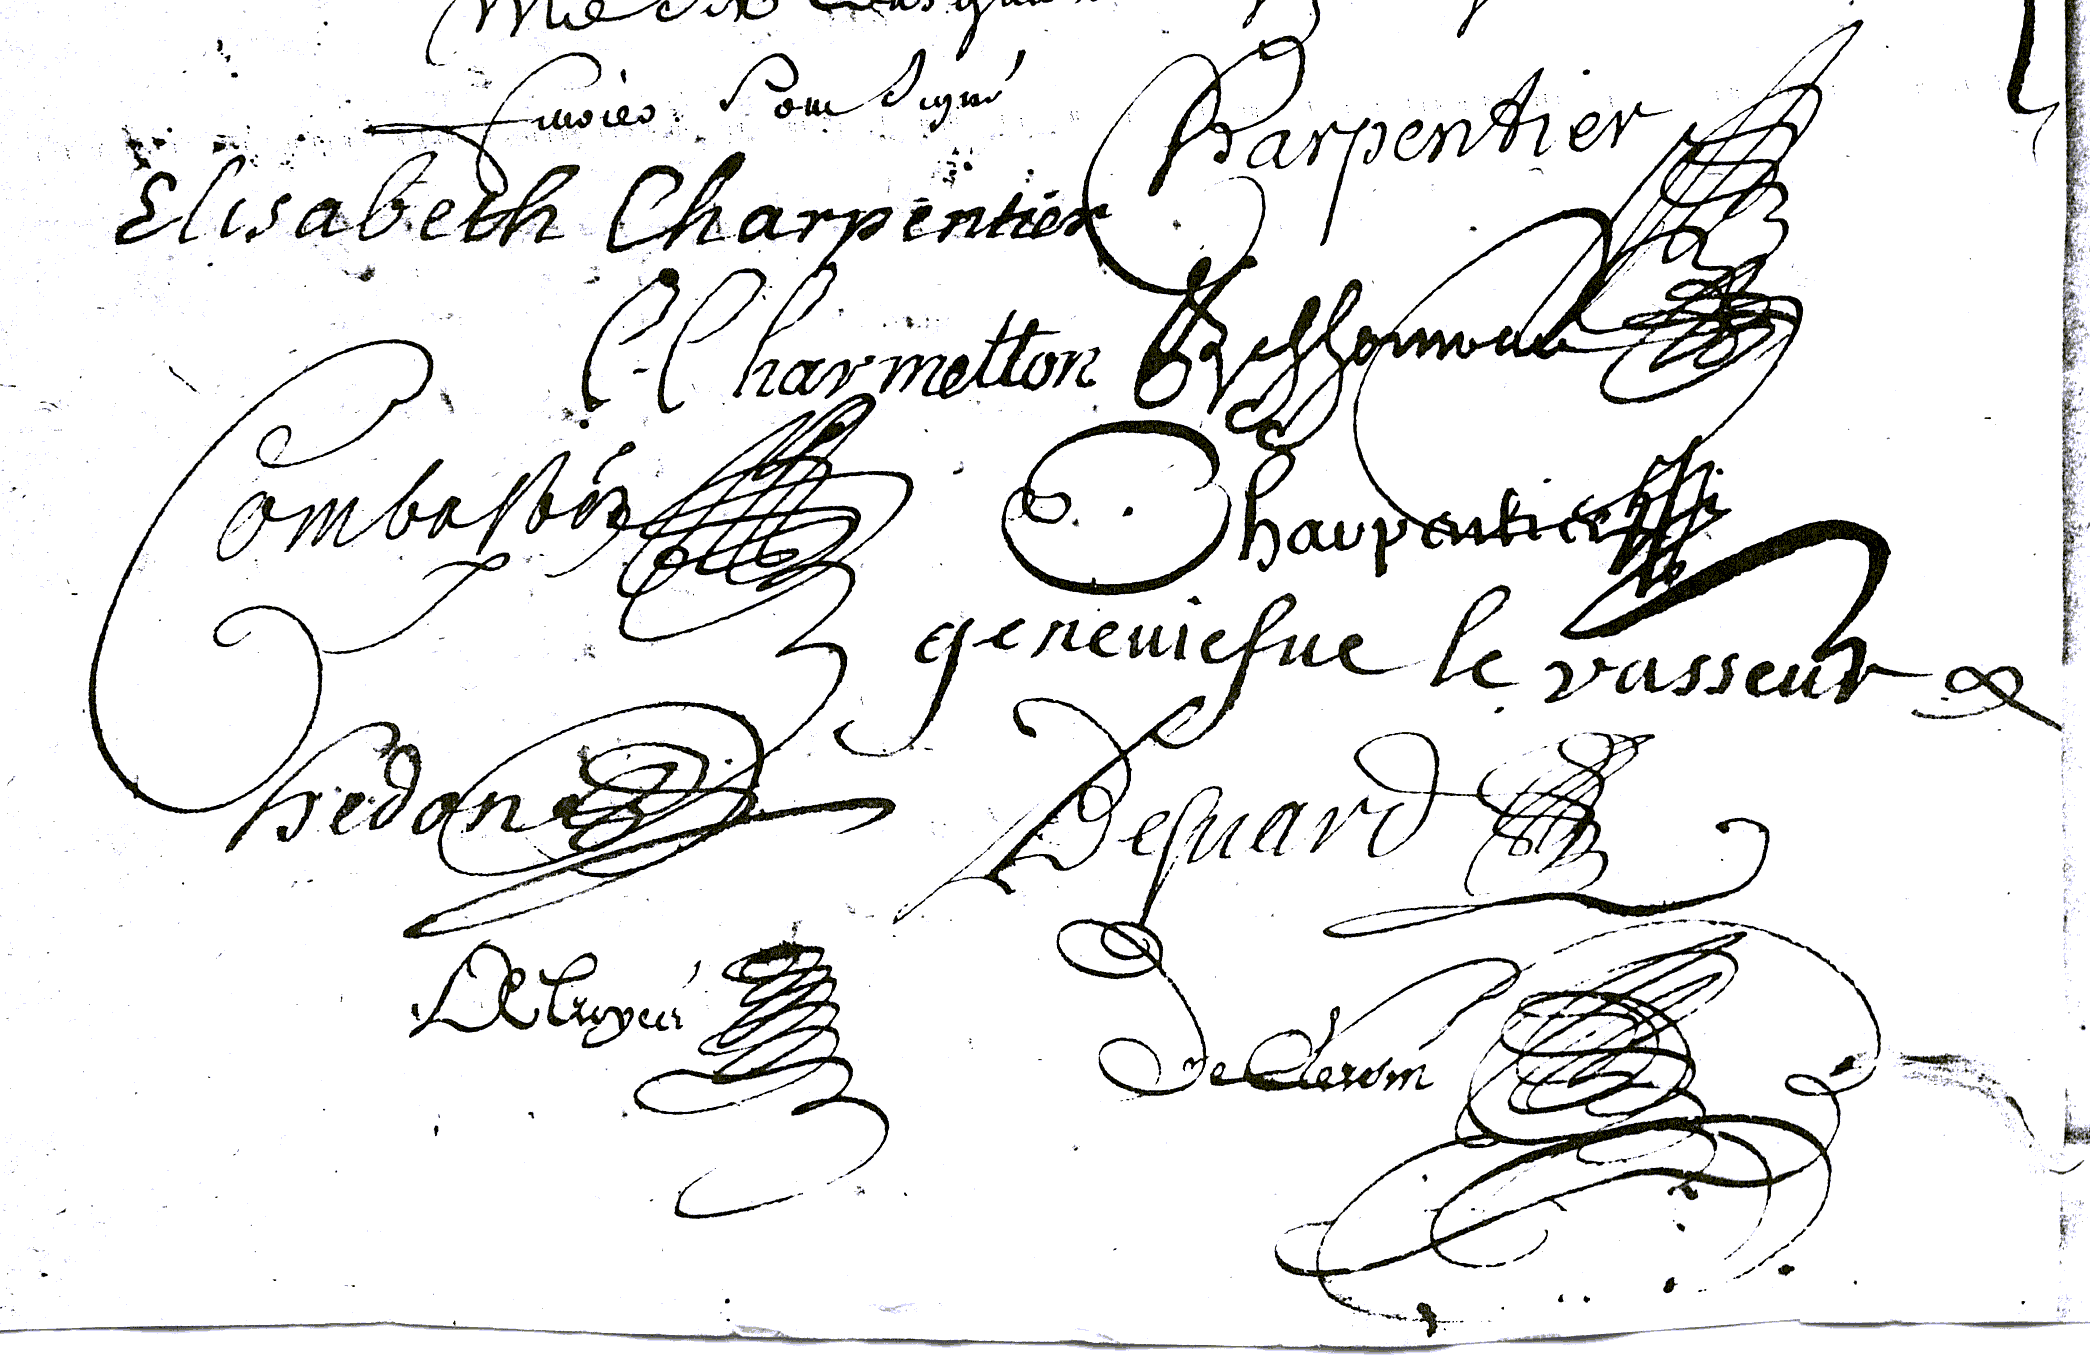 signatures on the guardianship document